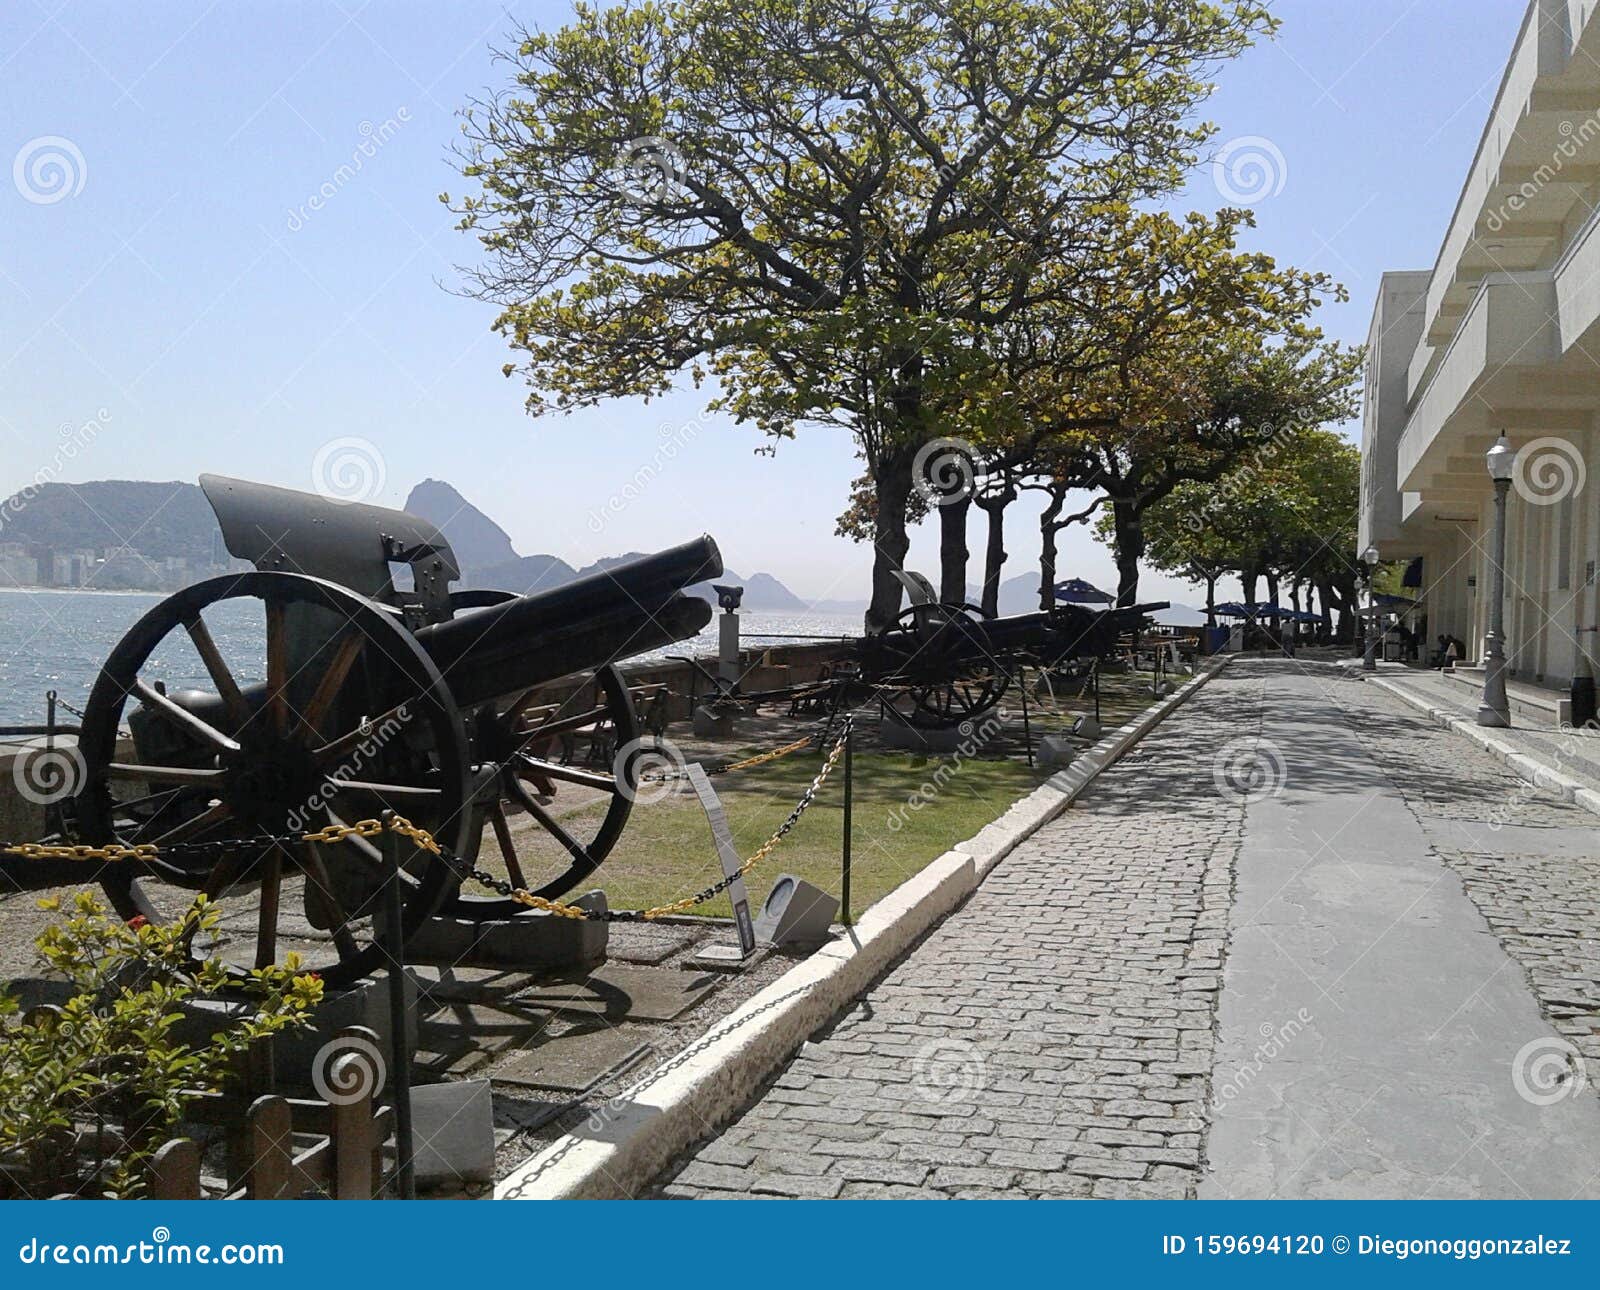 cannons in fort main street, copacabana fort rio de janeiro brazil.